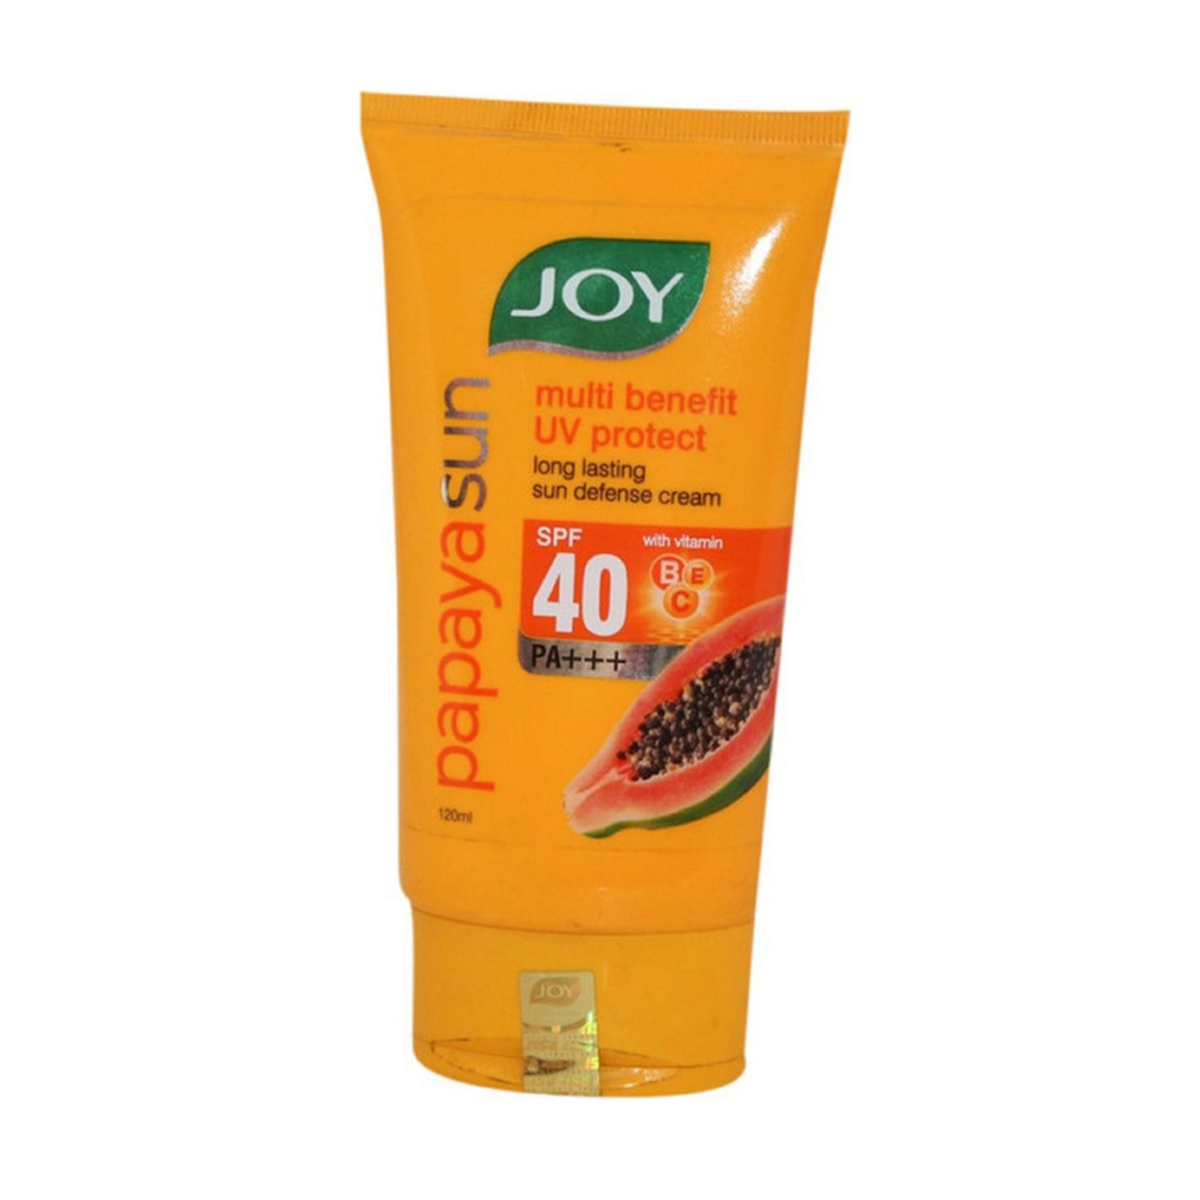 Joy Papaya Sunscreen - Multi Benefit UV Protect - Long Lasting Sun Defense Cream - PA+++ SPF 40 - 120ml